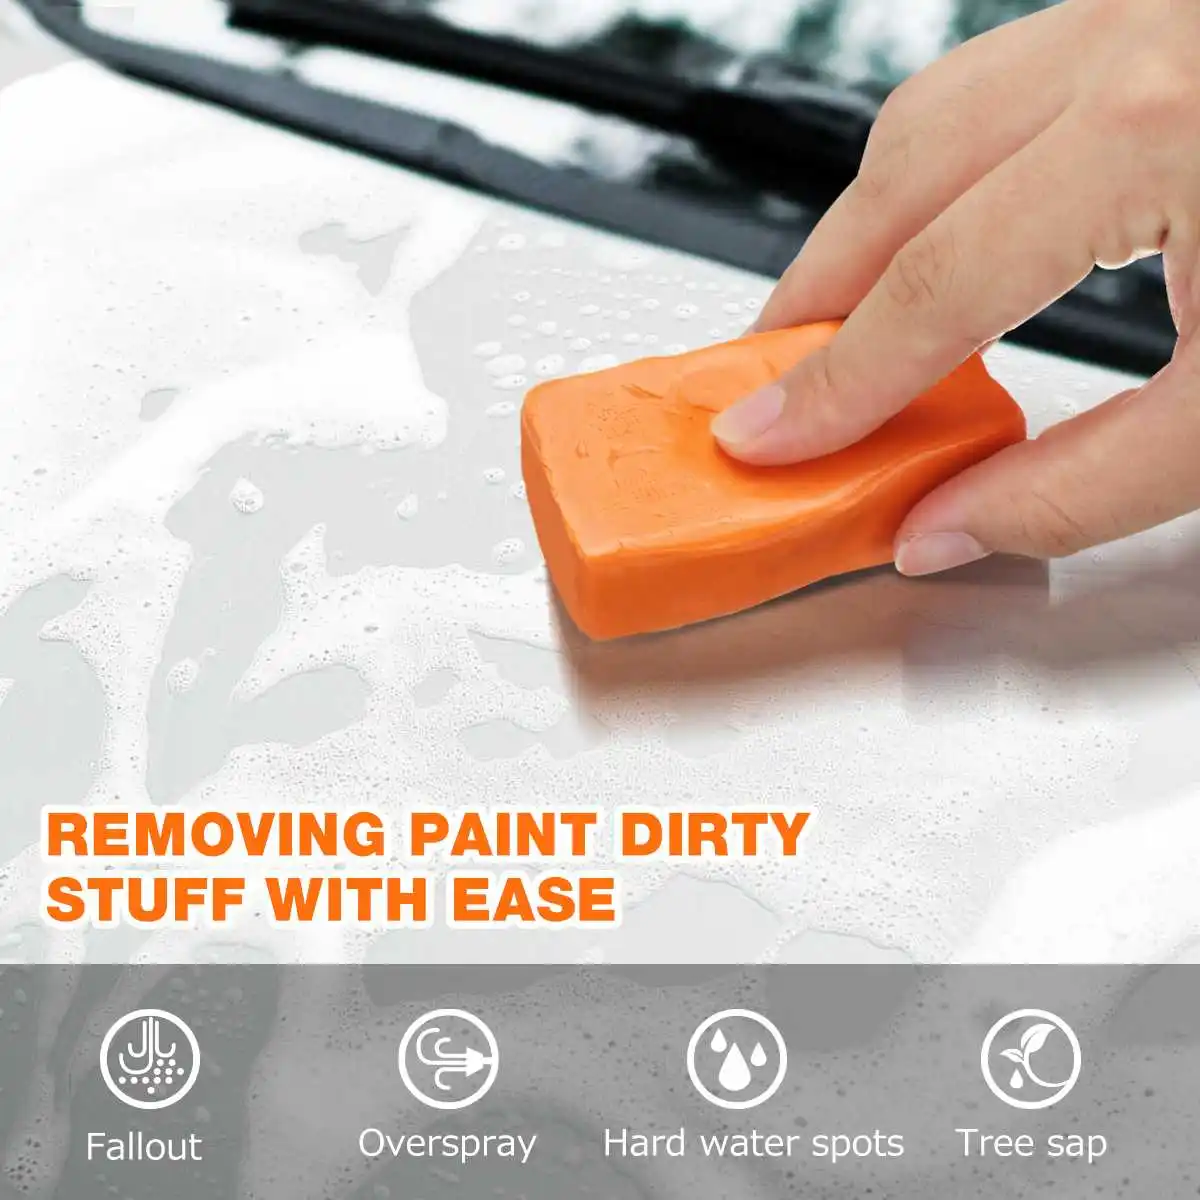 3PCS Car Clay Bar Kit Auto Vehicle Detailing Magic Cleaning Remove Wash  Blue Mud